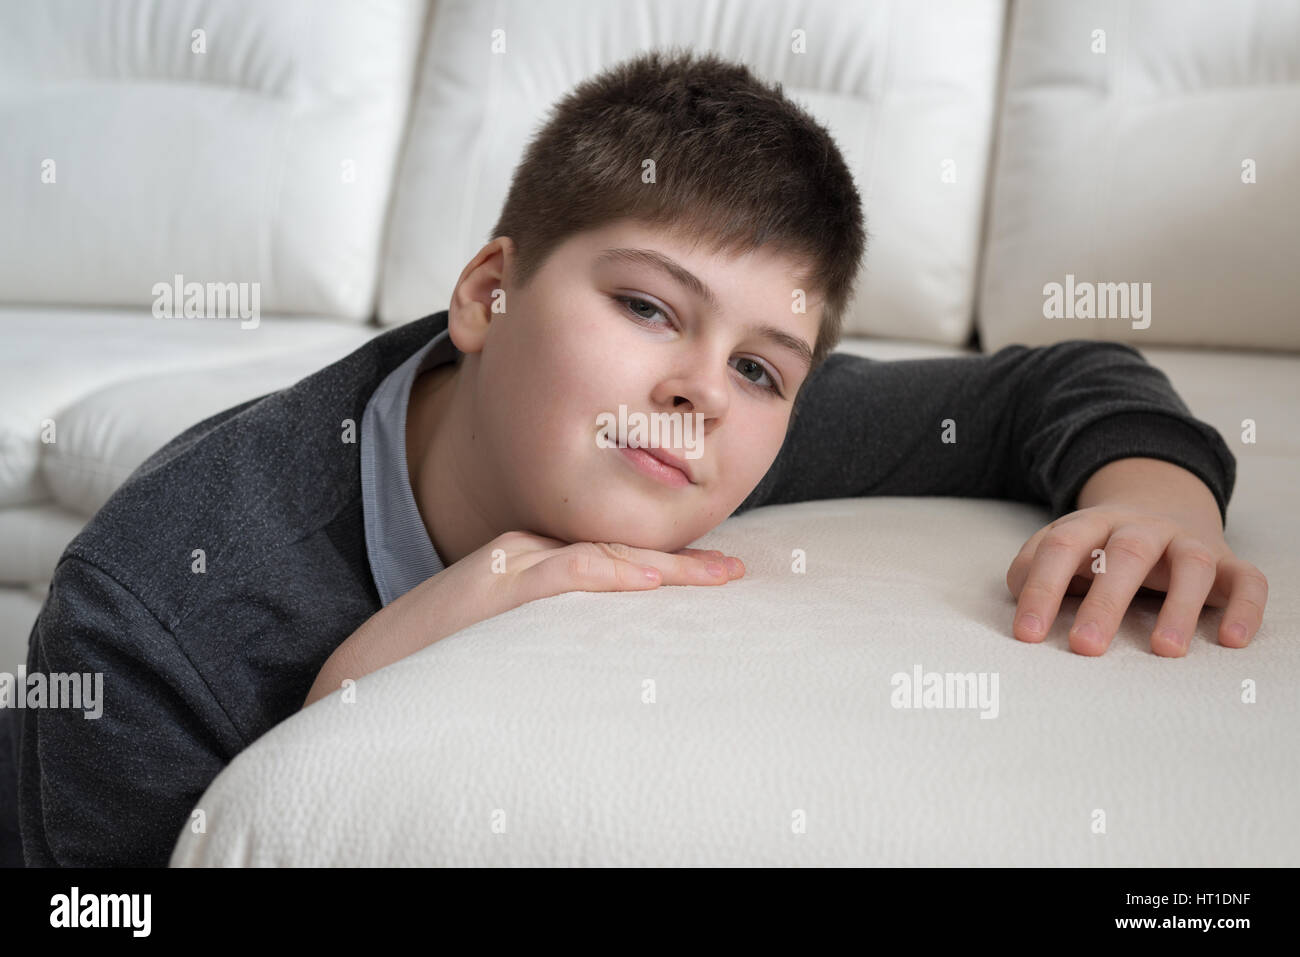 13 year boy sitting near the sofa in room Stock Photo